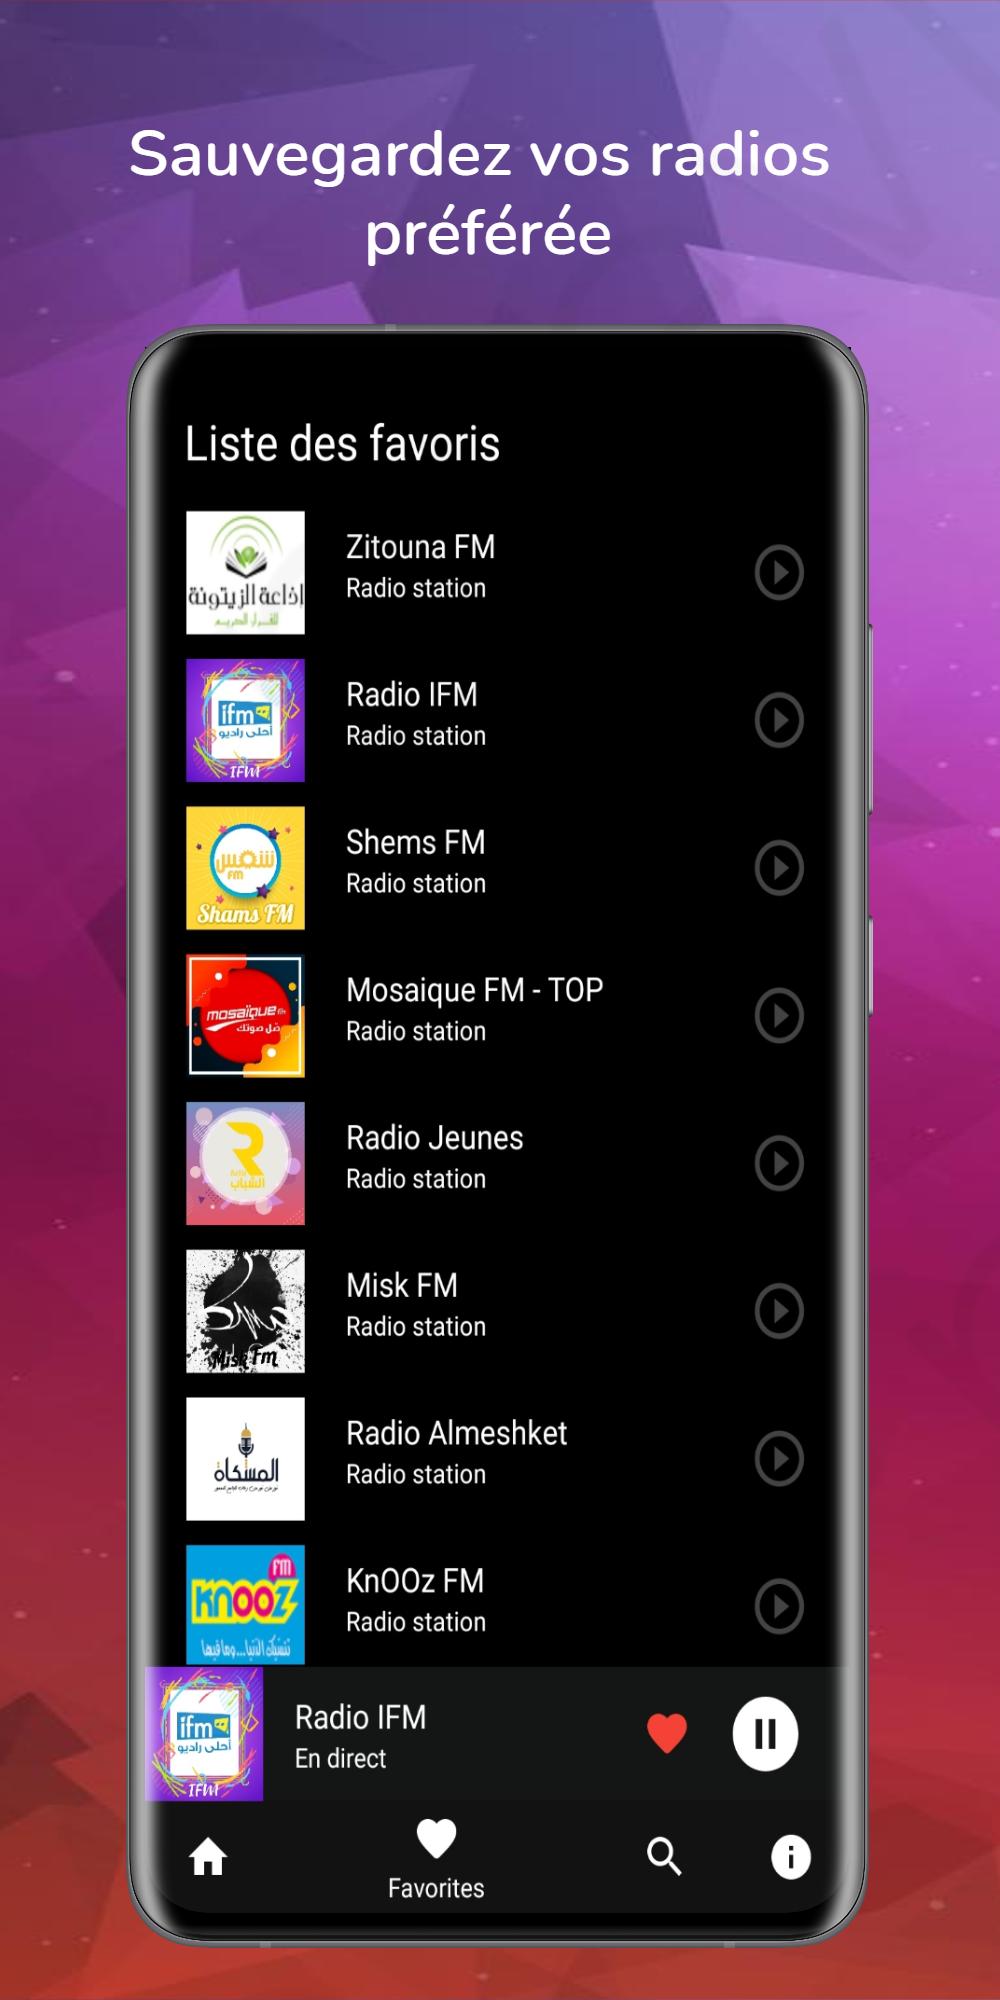 Radio Tunisie en direct - راديو تونس - إذاعات for Android - APK Download